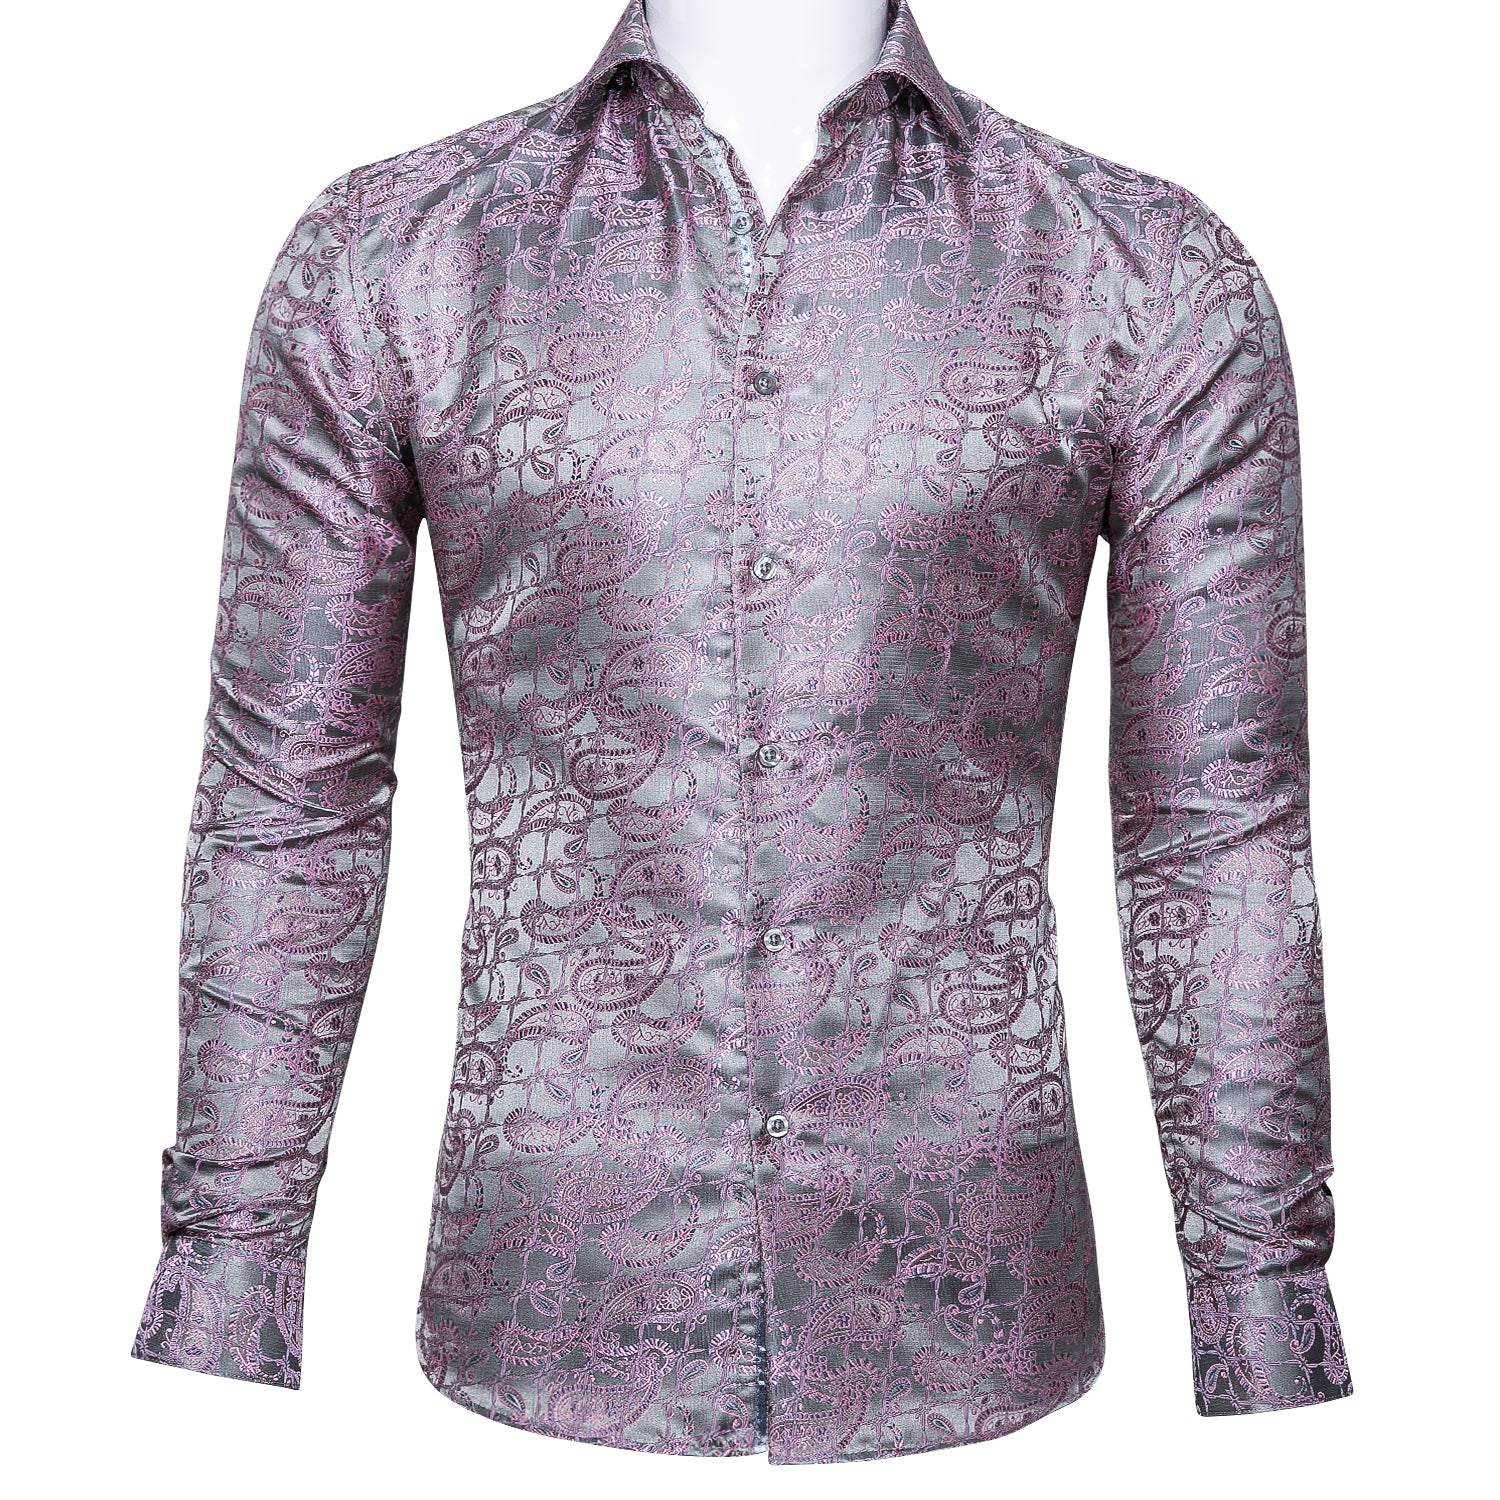 Barry.wang Novelty Grey Purple Paisley Shirt